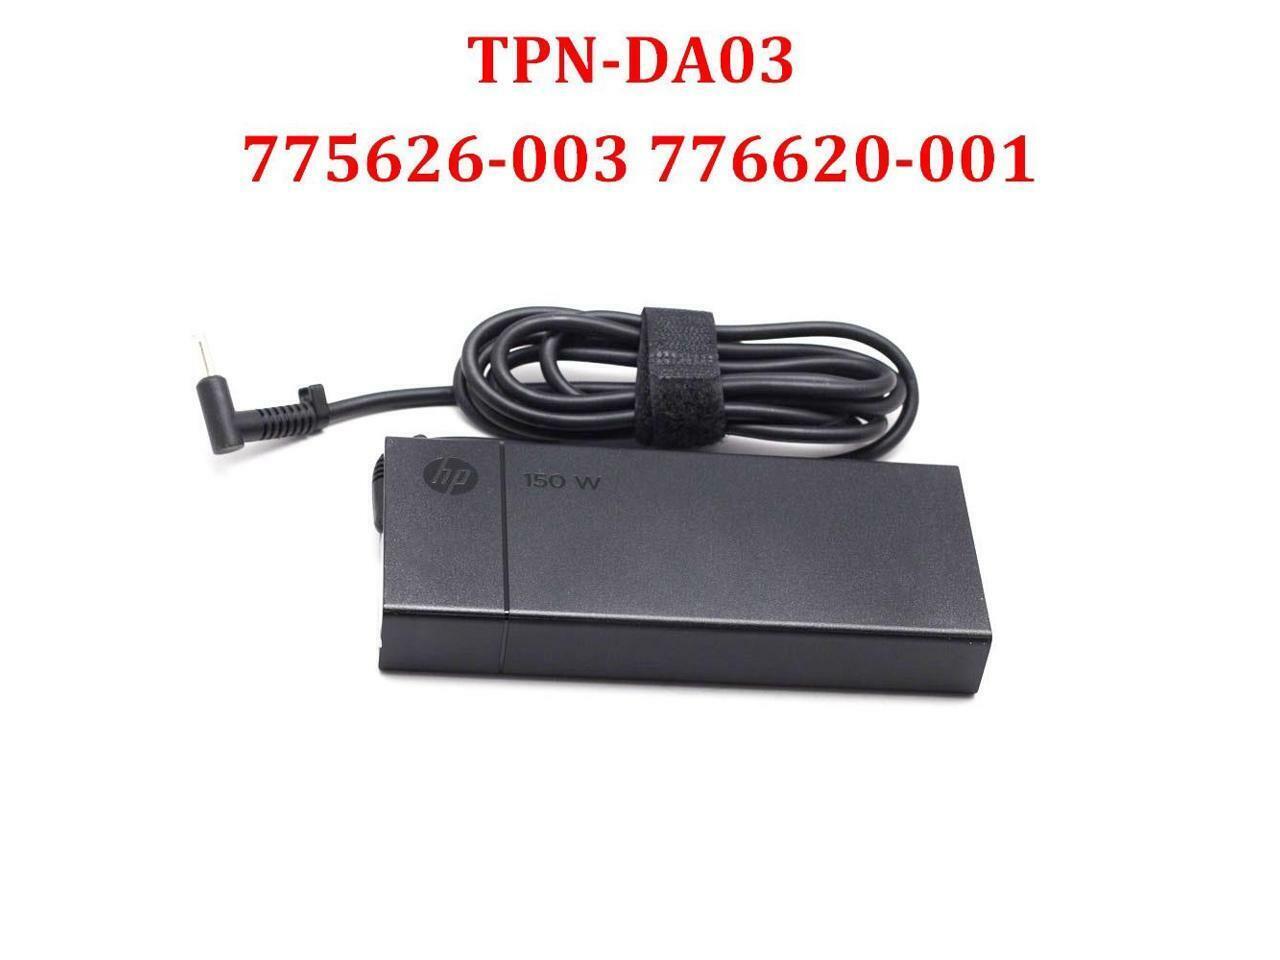 Genuine HP 150W 19.5V AC Adapter Power Supply 776620-001 776620-003 US SELLER